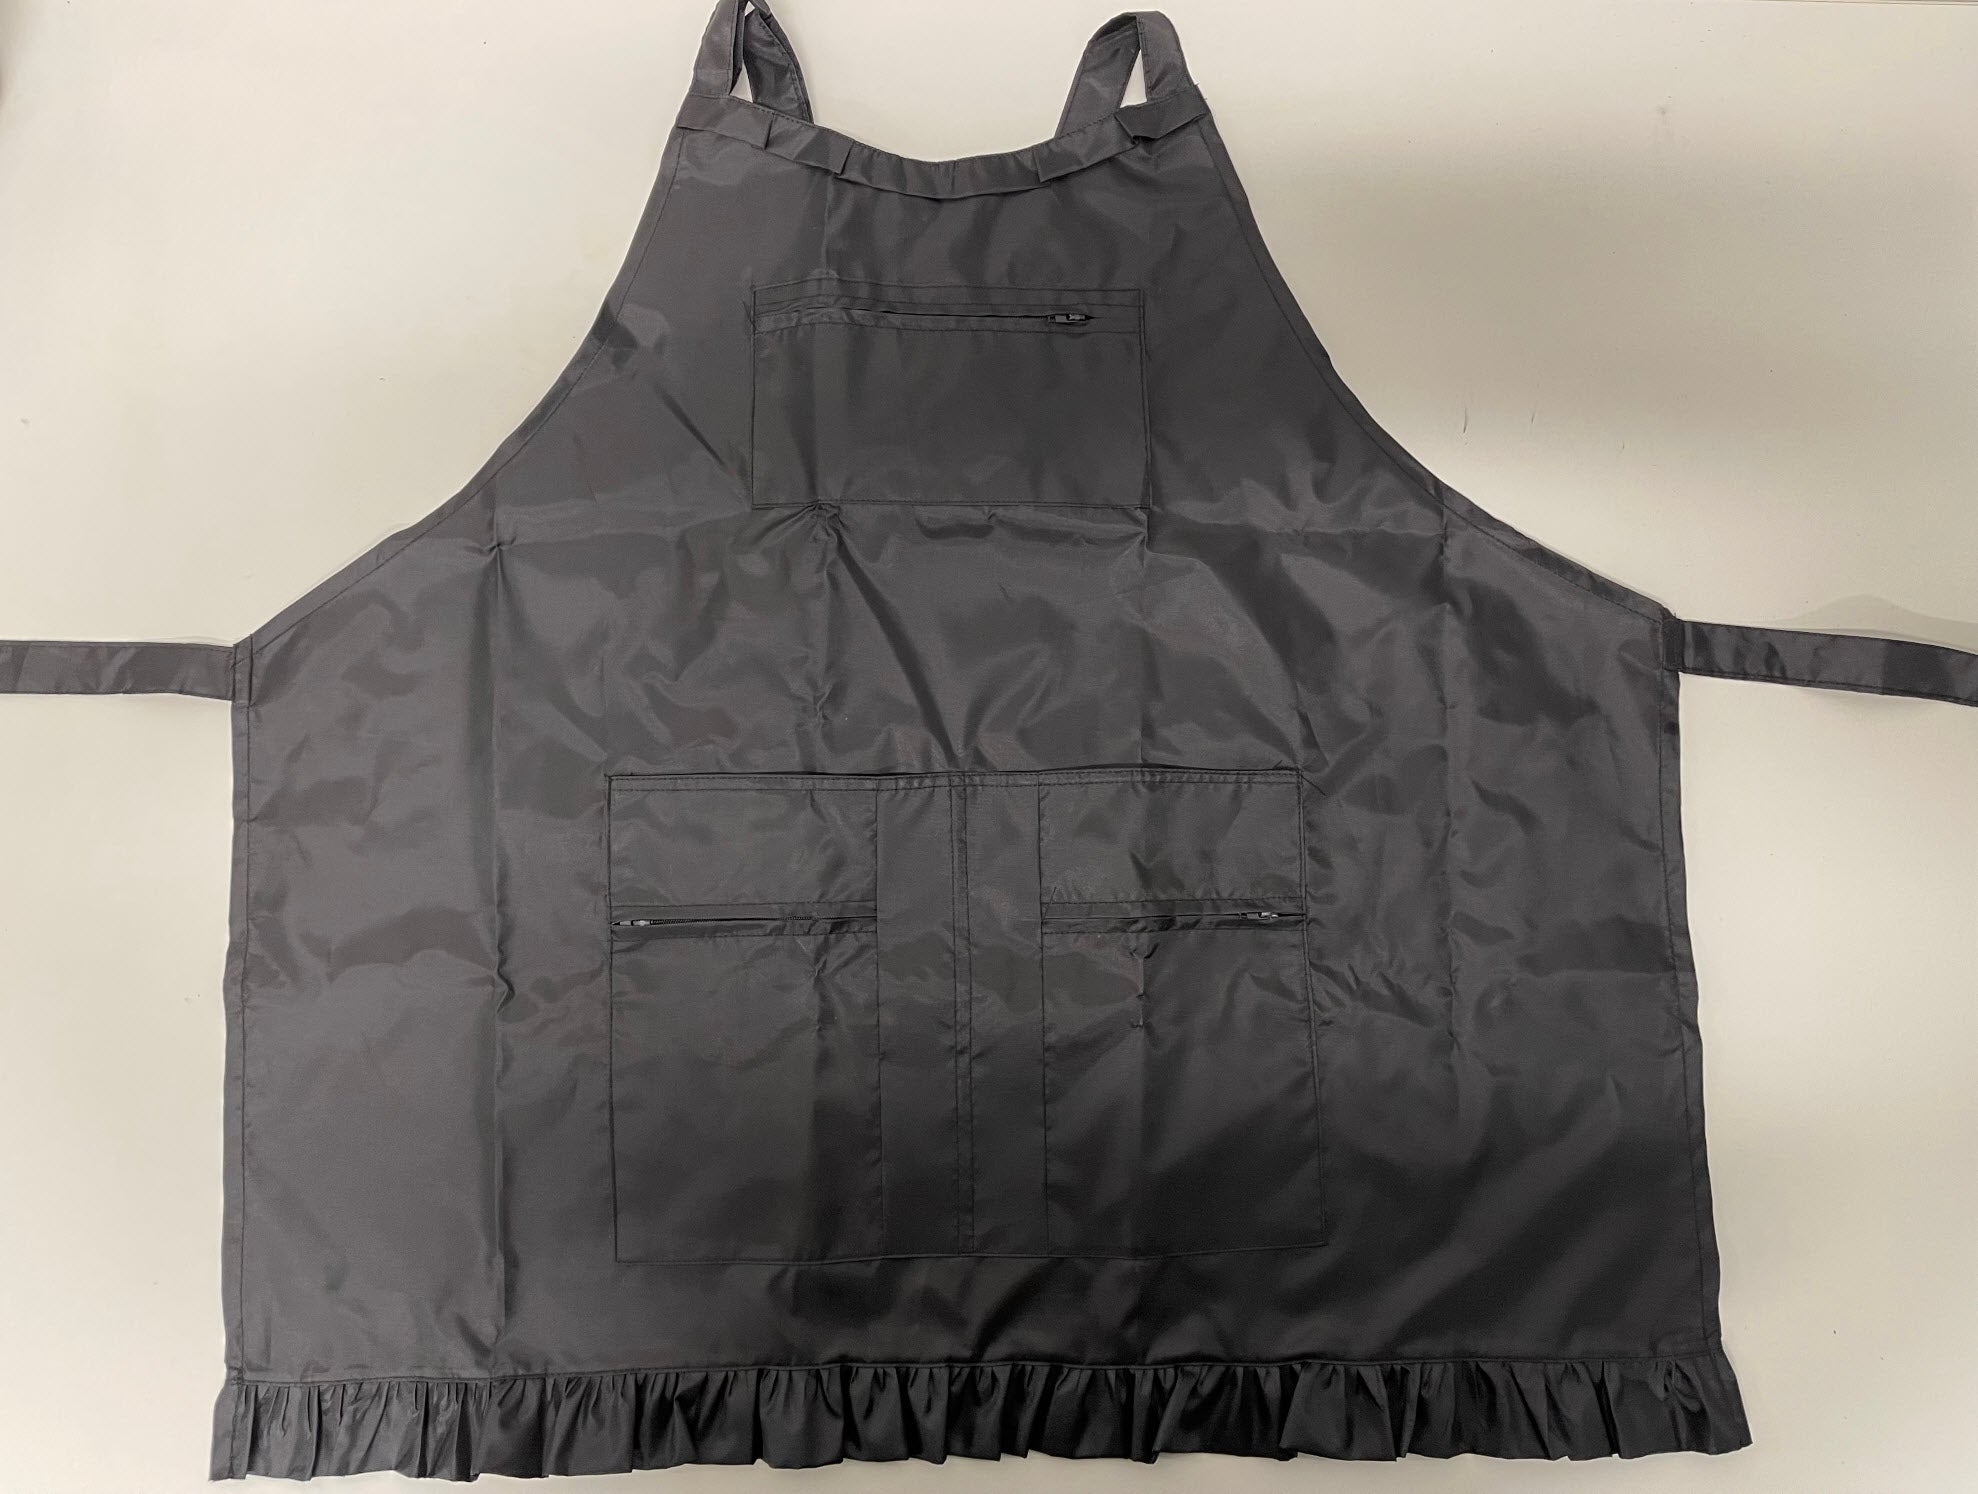 Scalpmaster Criss-Cross Stylist Apron Black 3 Pockets One Size Fits Most